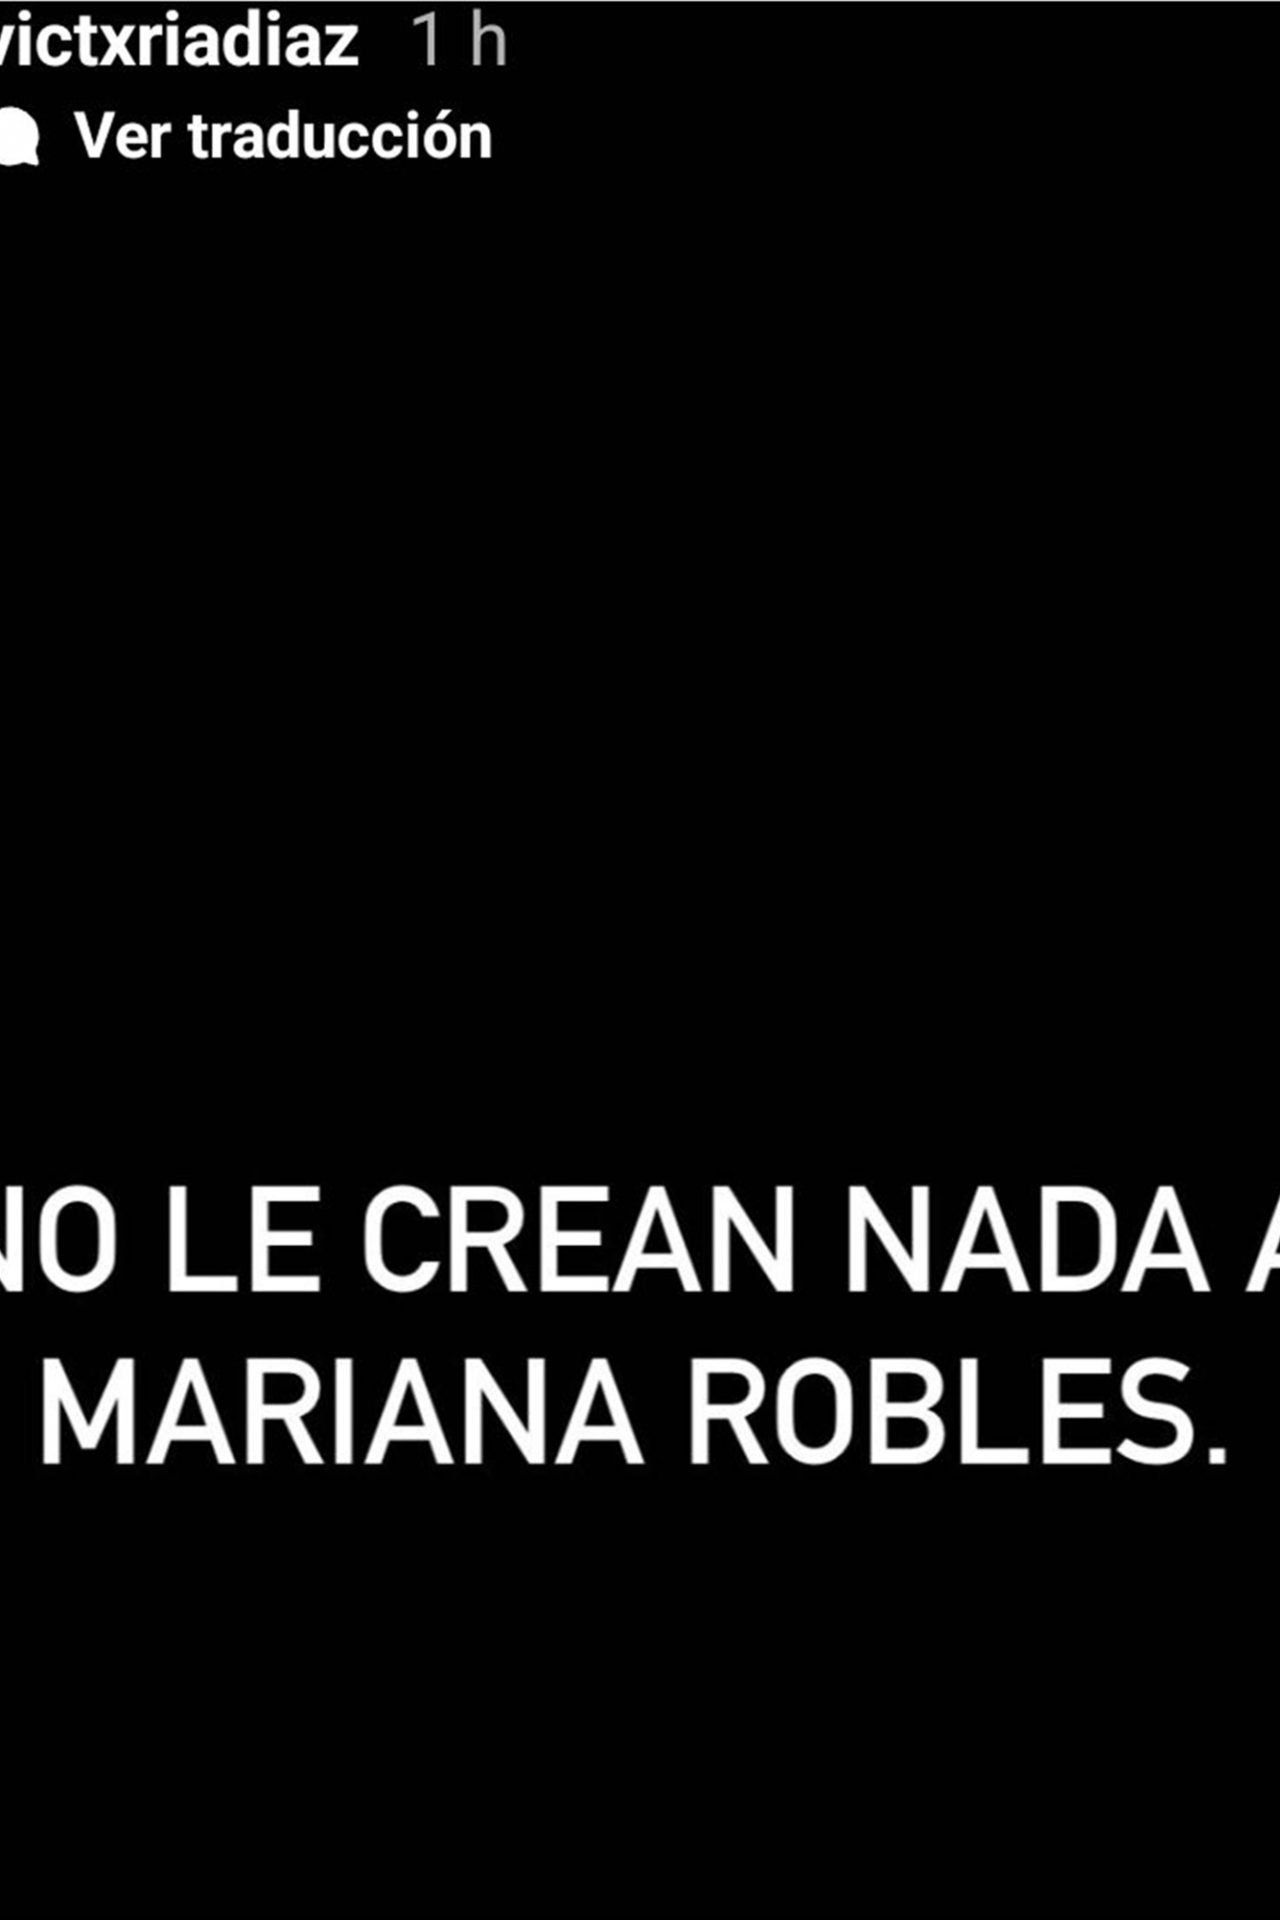 'No le crean nada a Mariana Robles'